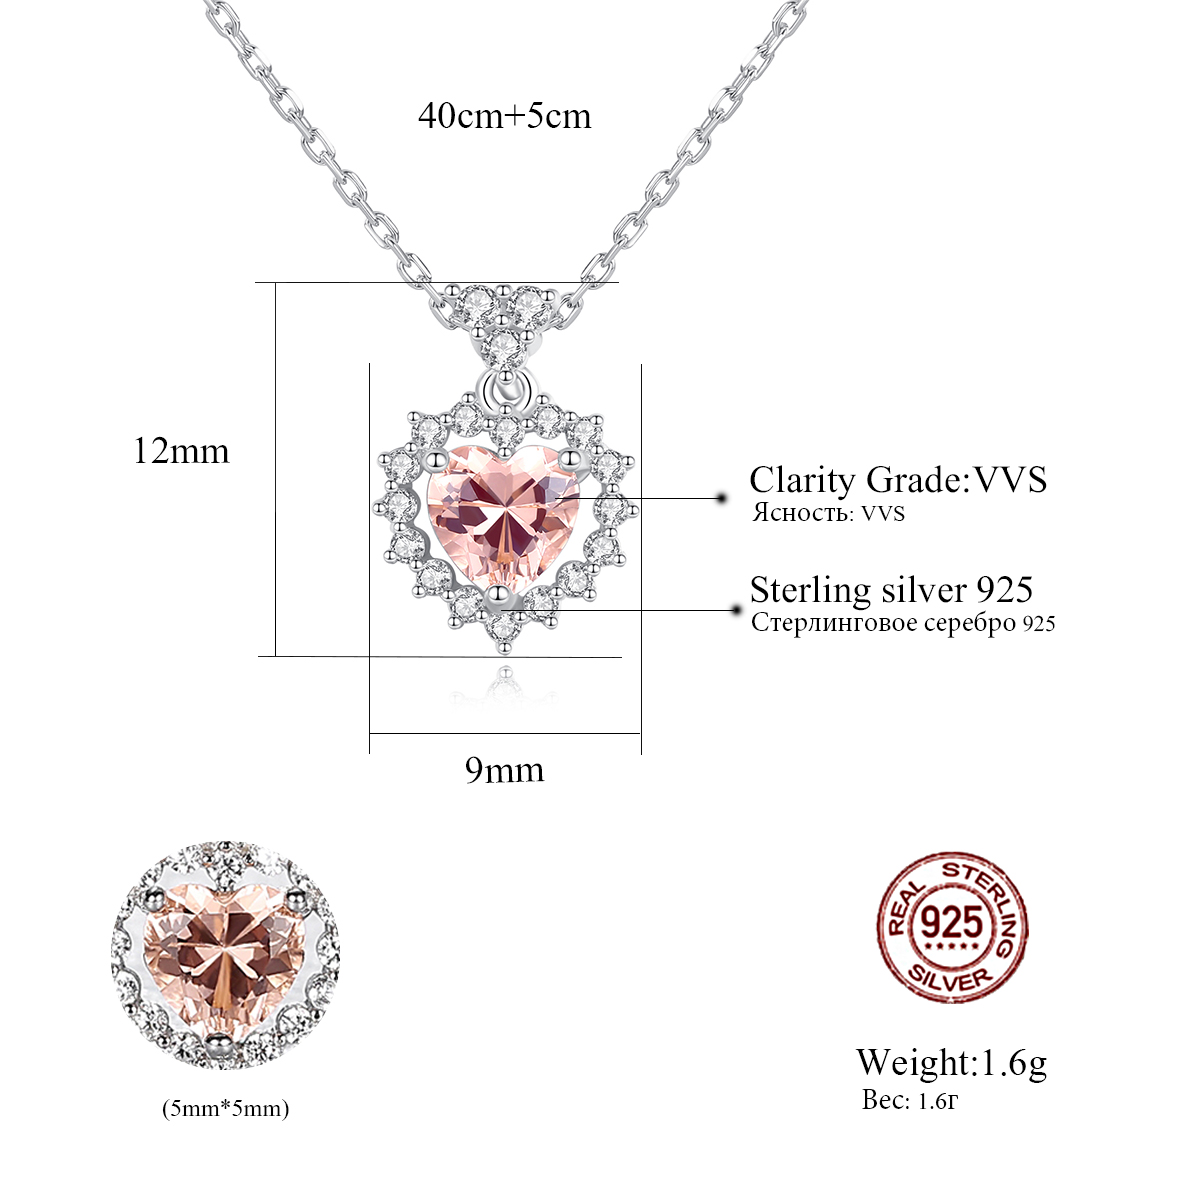 Exquisite Peach Garnet Pendantsterling Silver Necklace